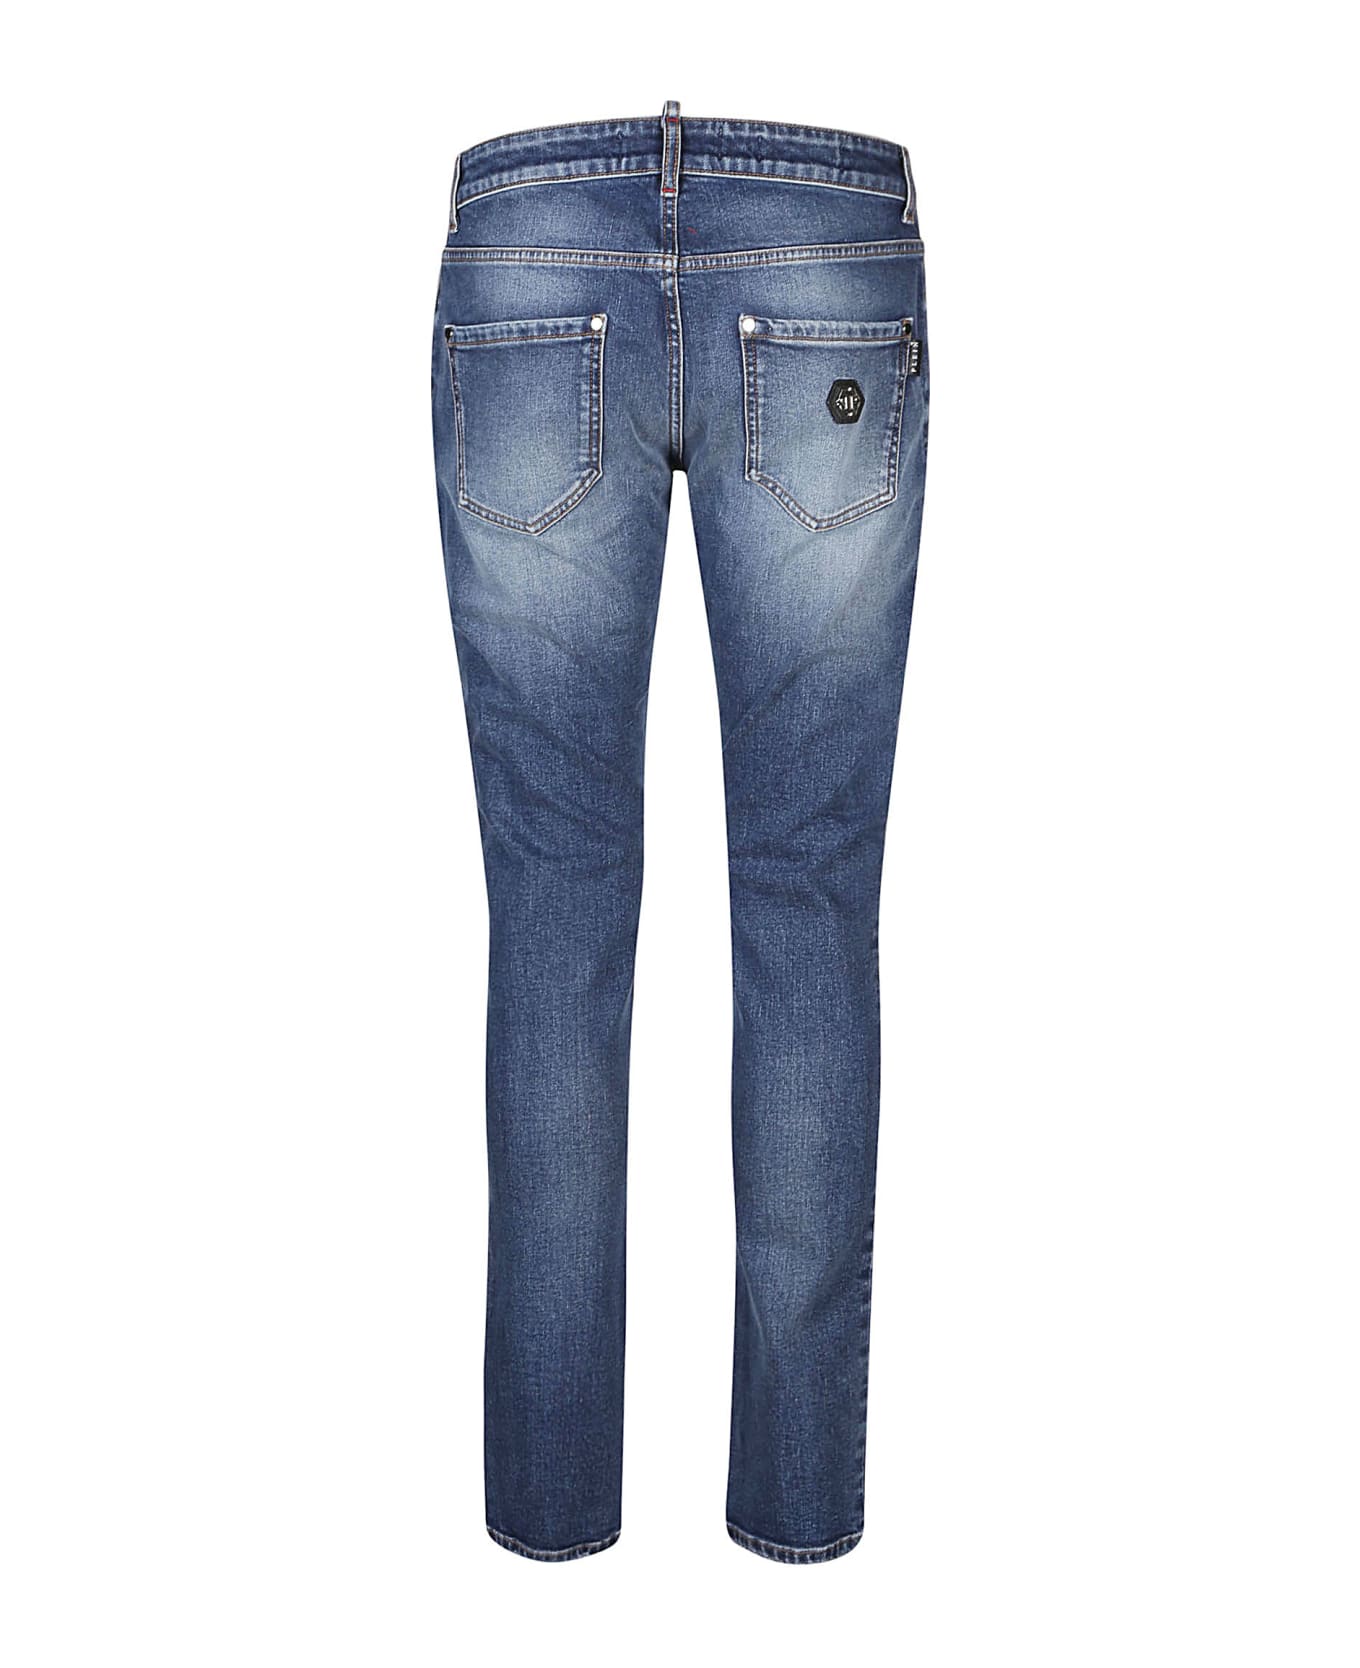 Philipp Plein Super Straight Cut Jeans - Bm Blue Marlin デニム